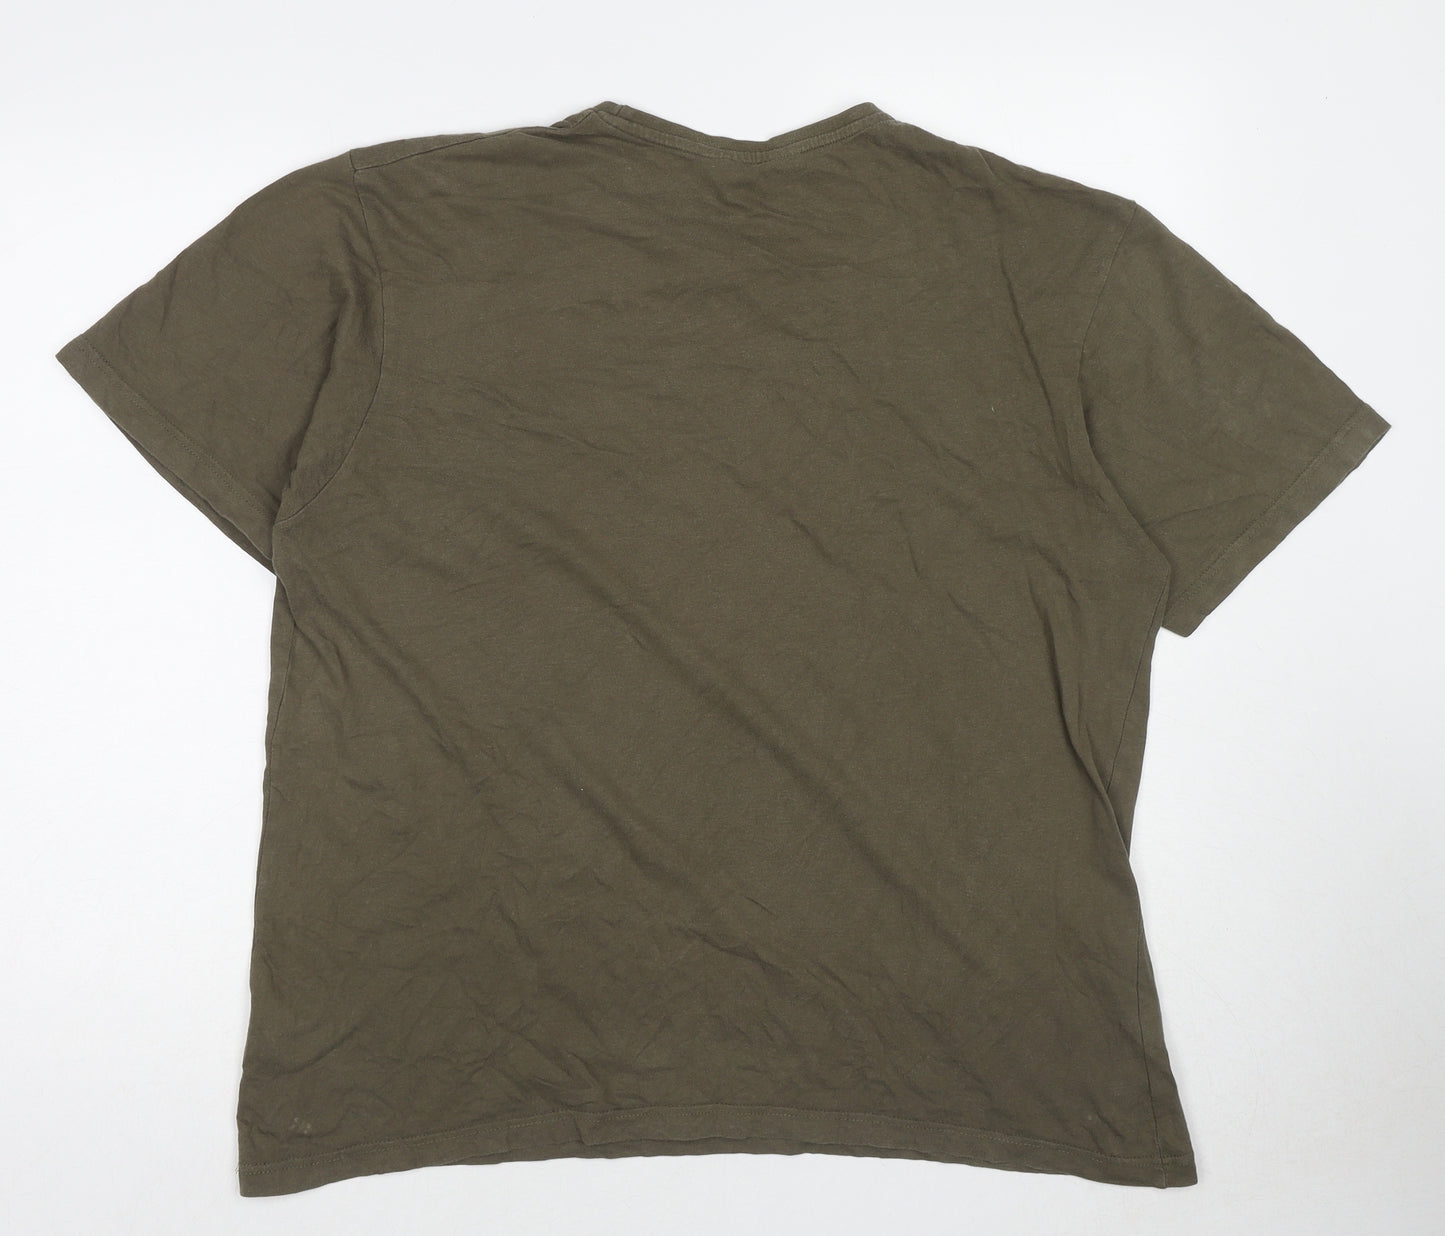 BadRhino Mens Green Cotton T-Shirt Size M Round Neck